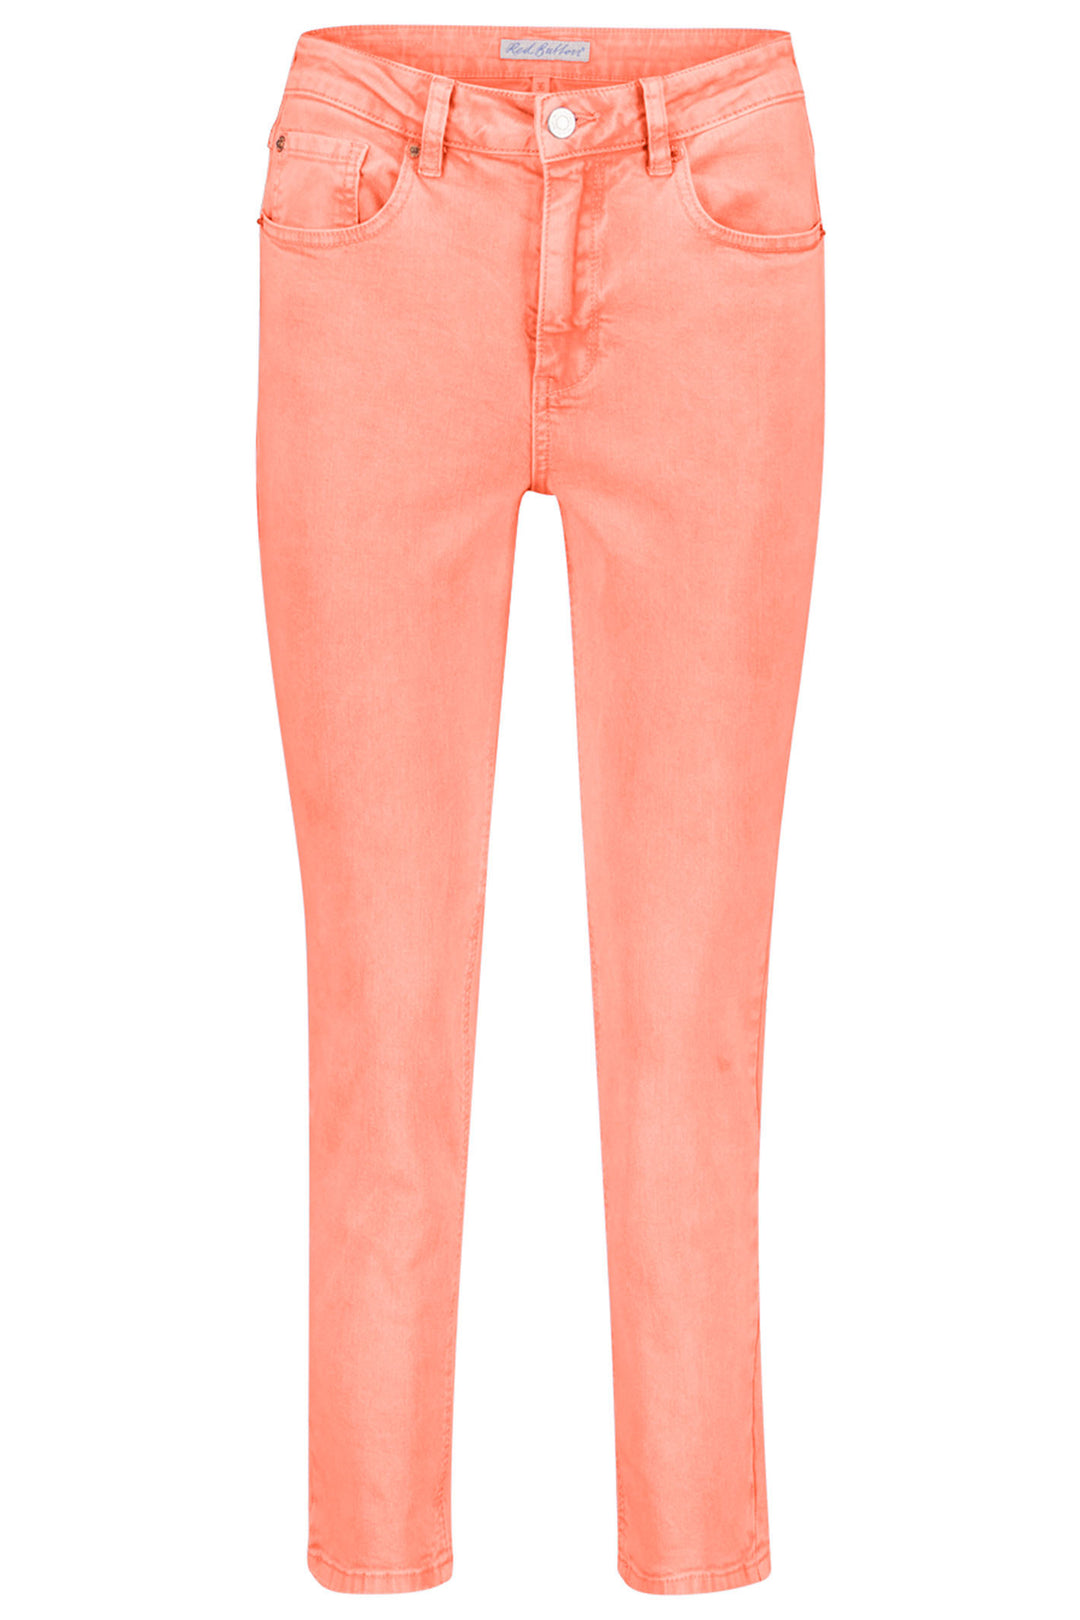 Red Button SRB4157 Tara Flamingo Coral Denim Jeans 68cm - Olivia Grace Fashion